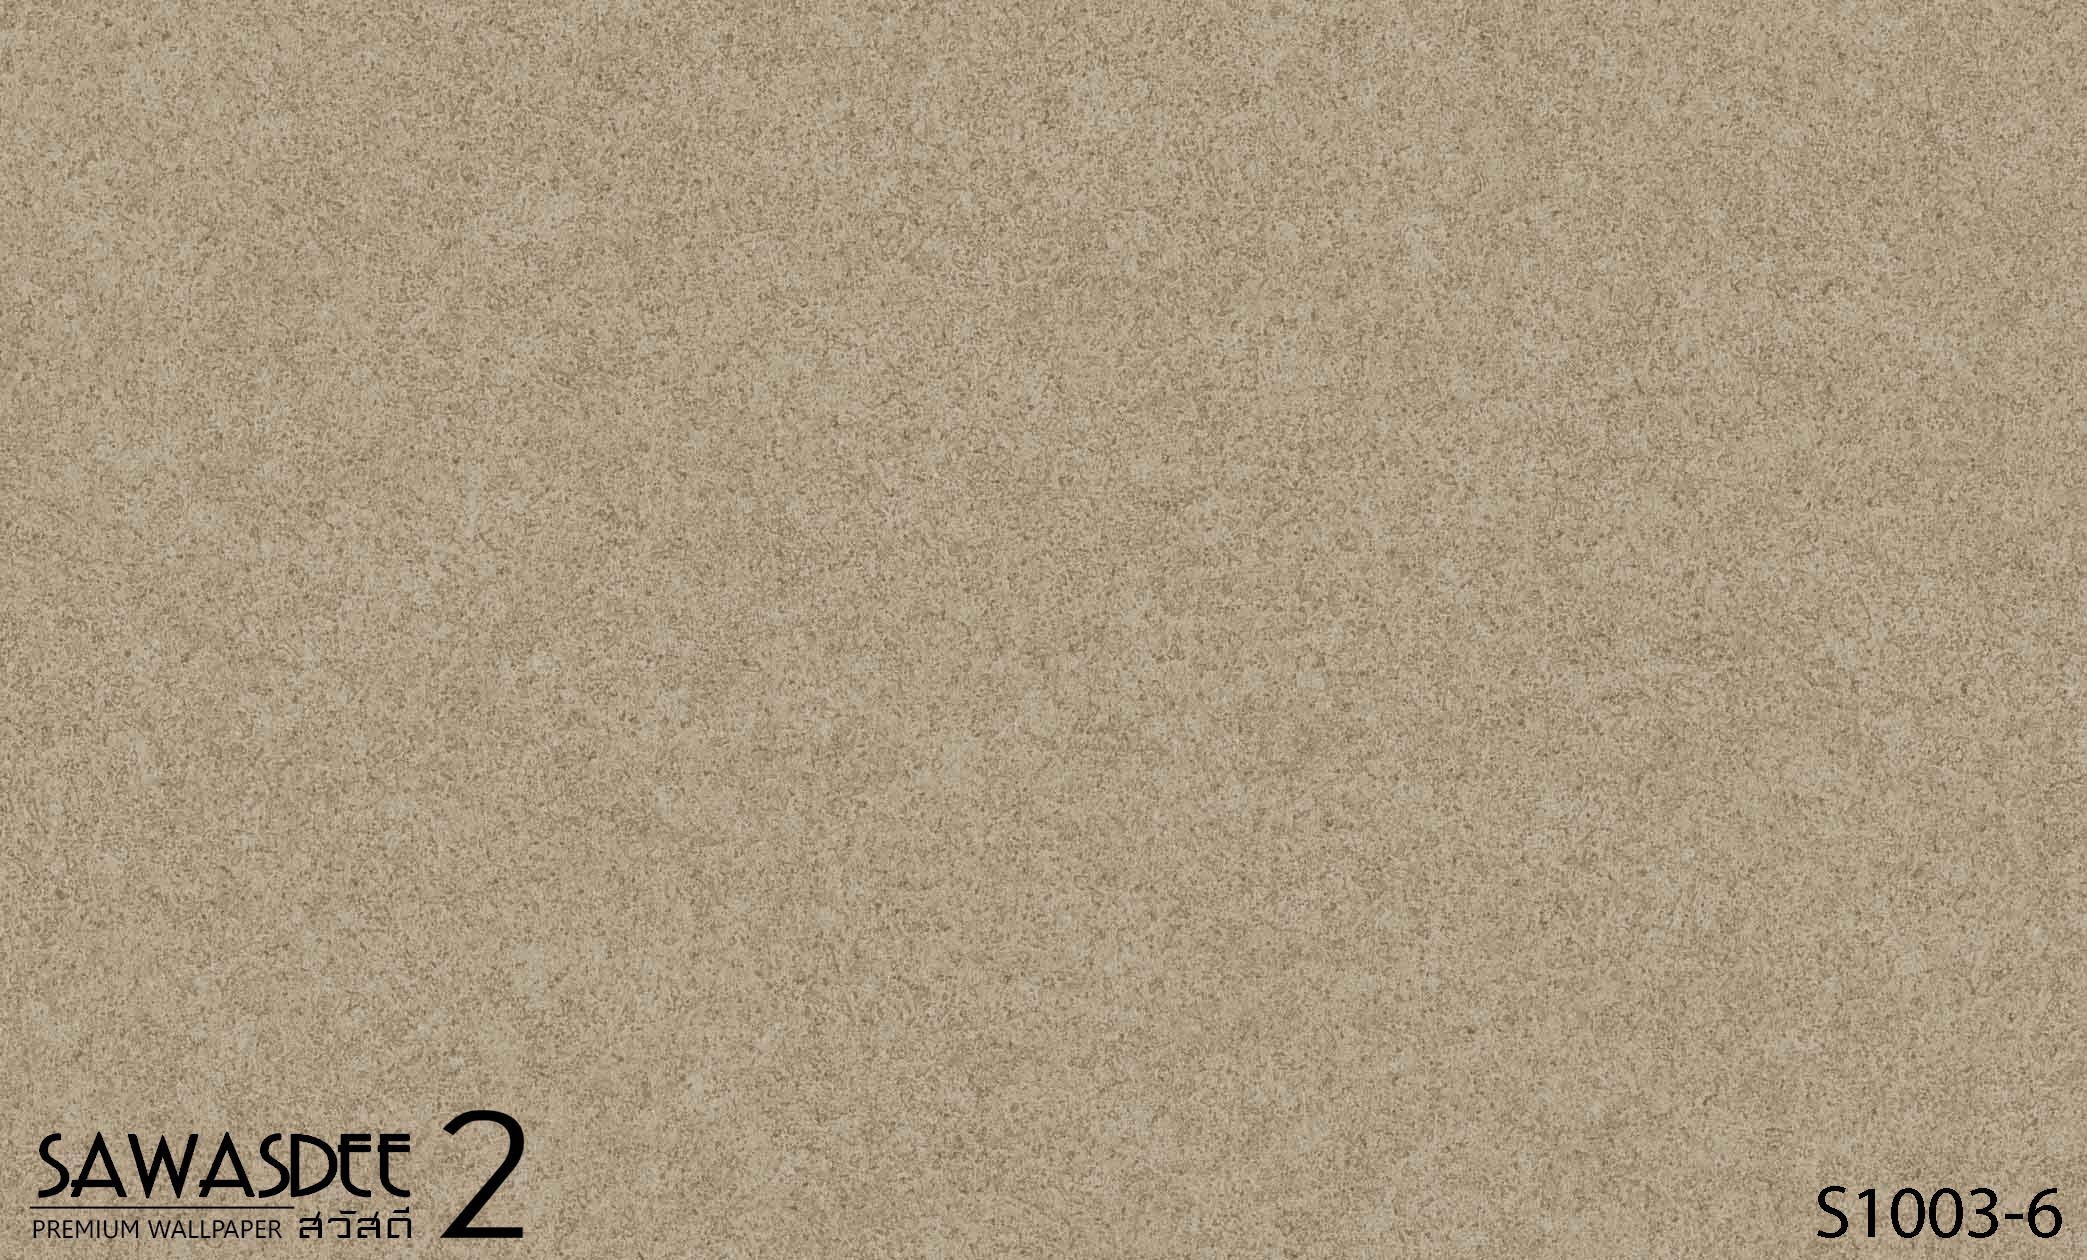 Wallpaper (SAWASDEE 2) S1003-6